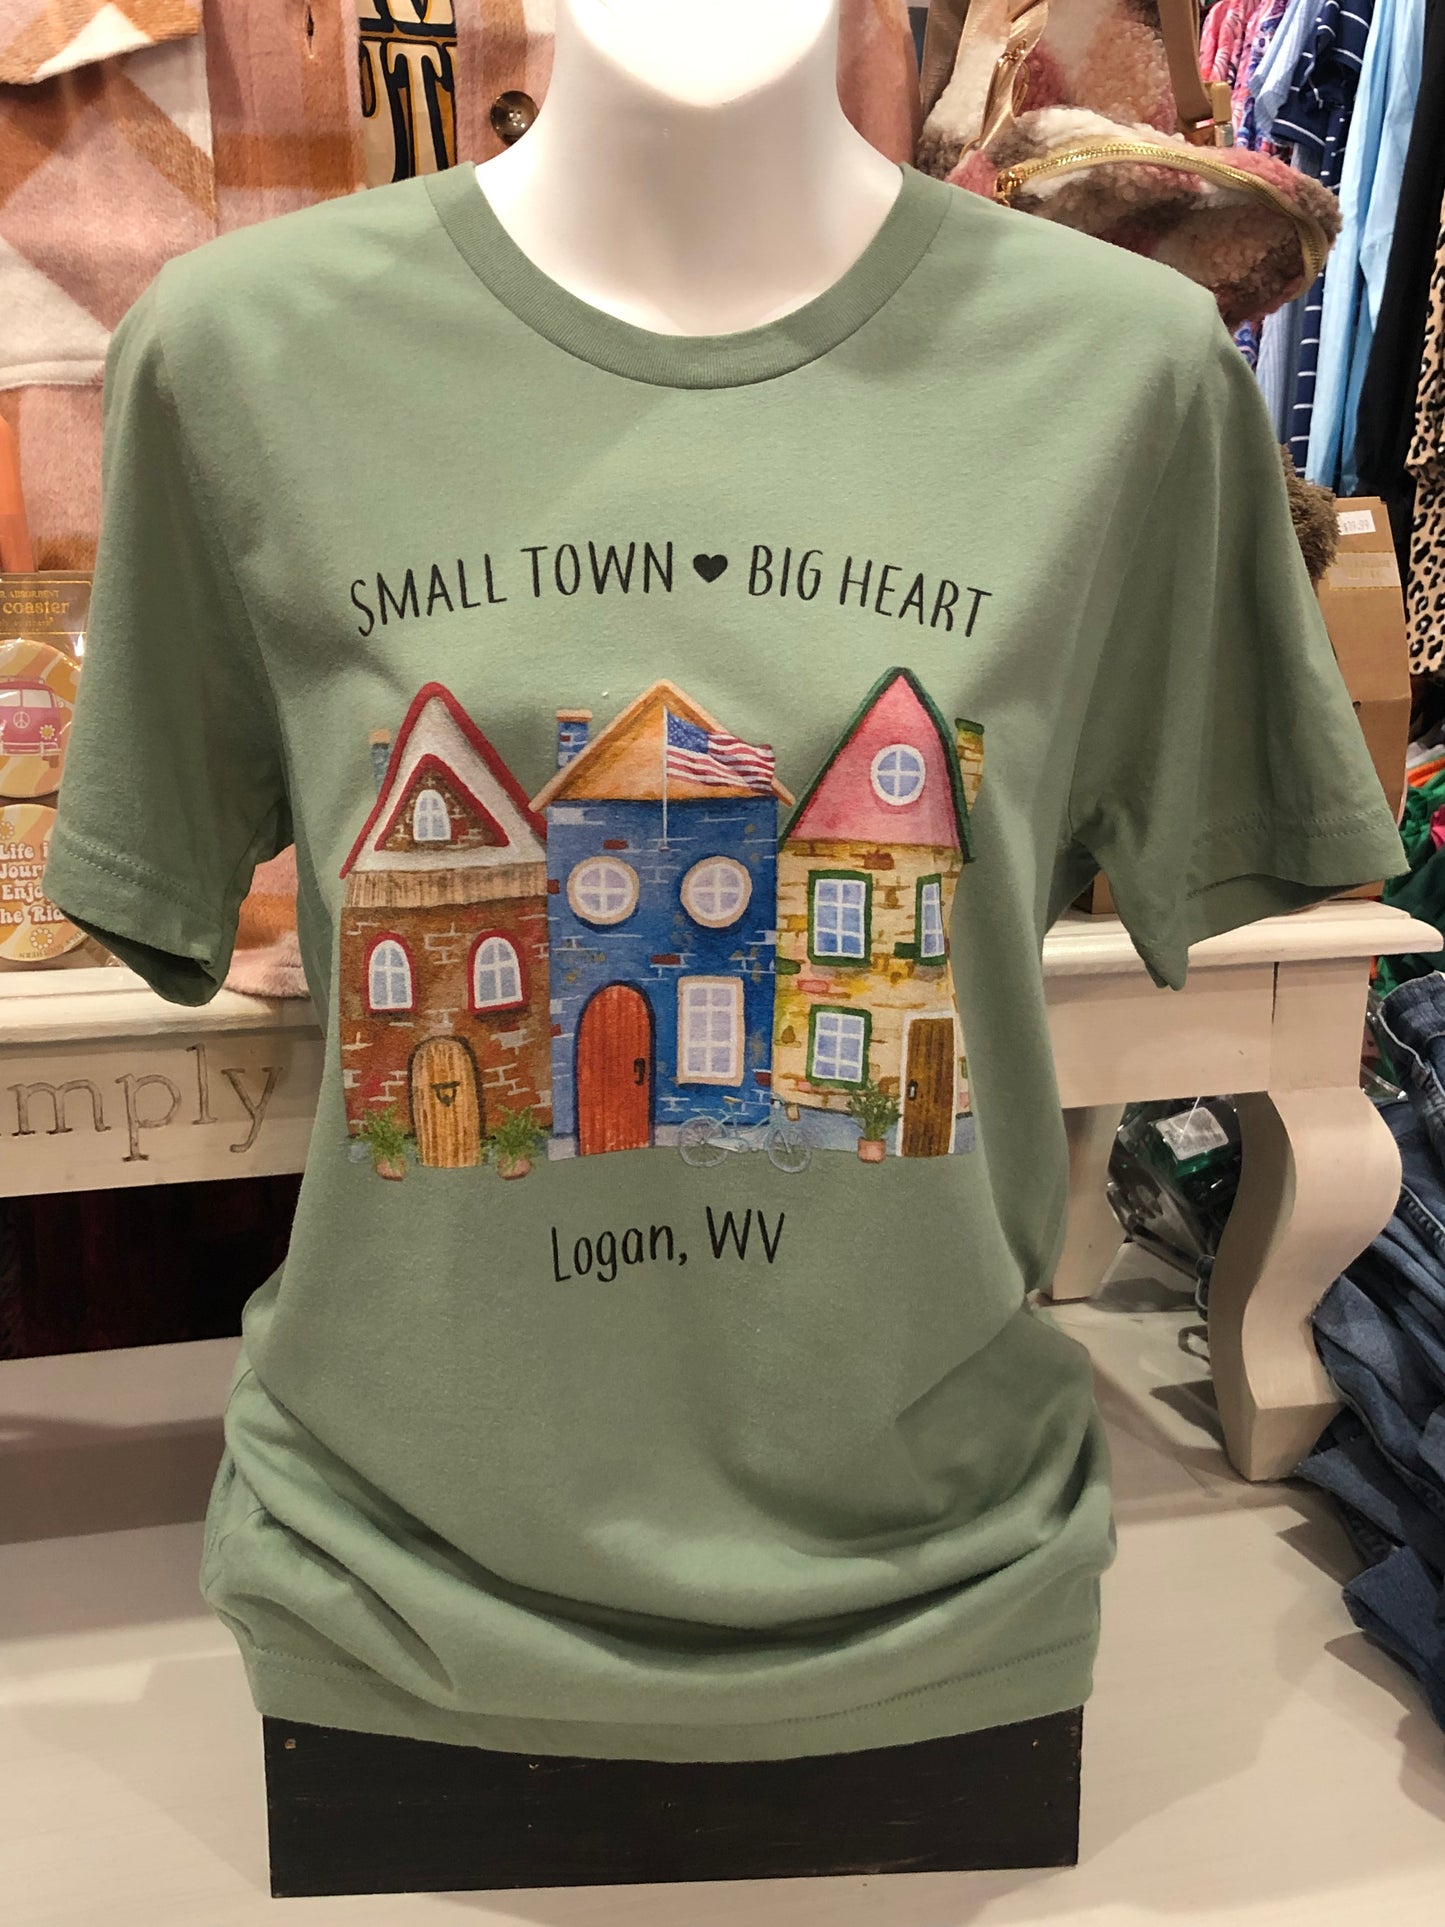 SMALL TOWN BIG HEART LOGAN WV